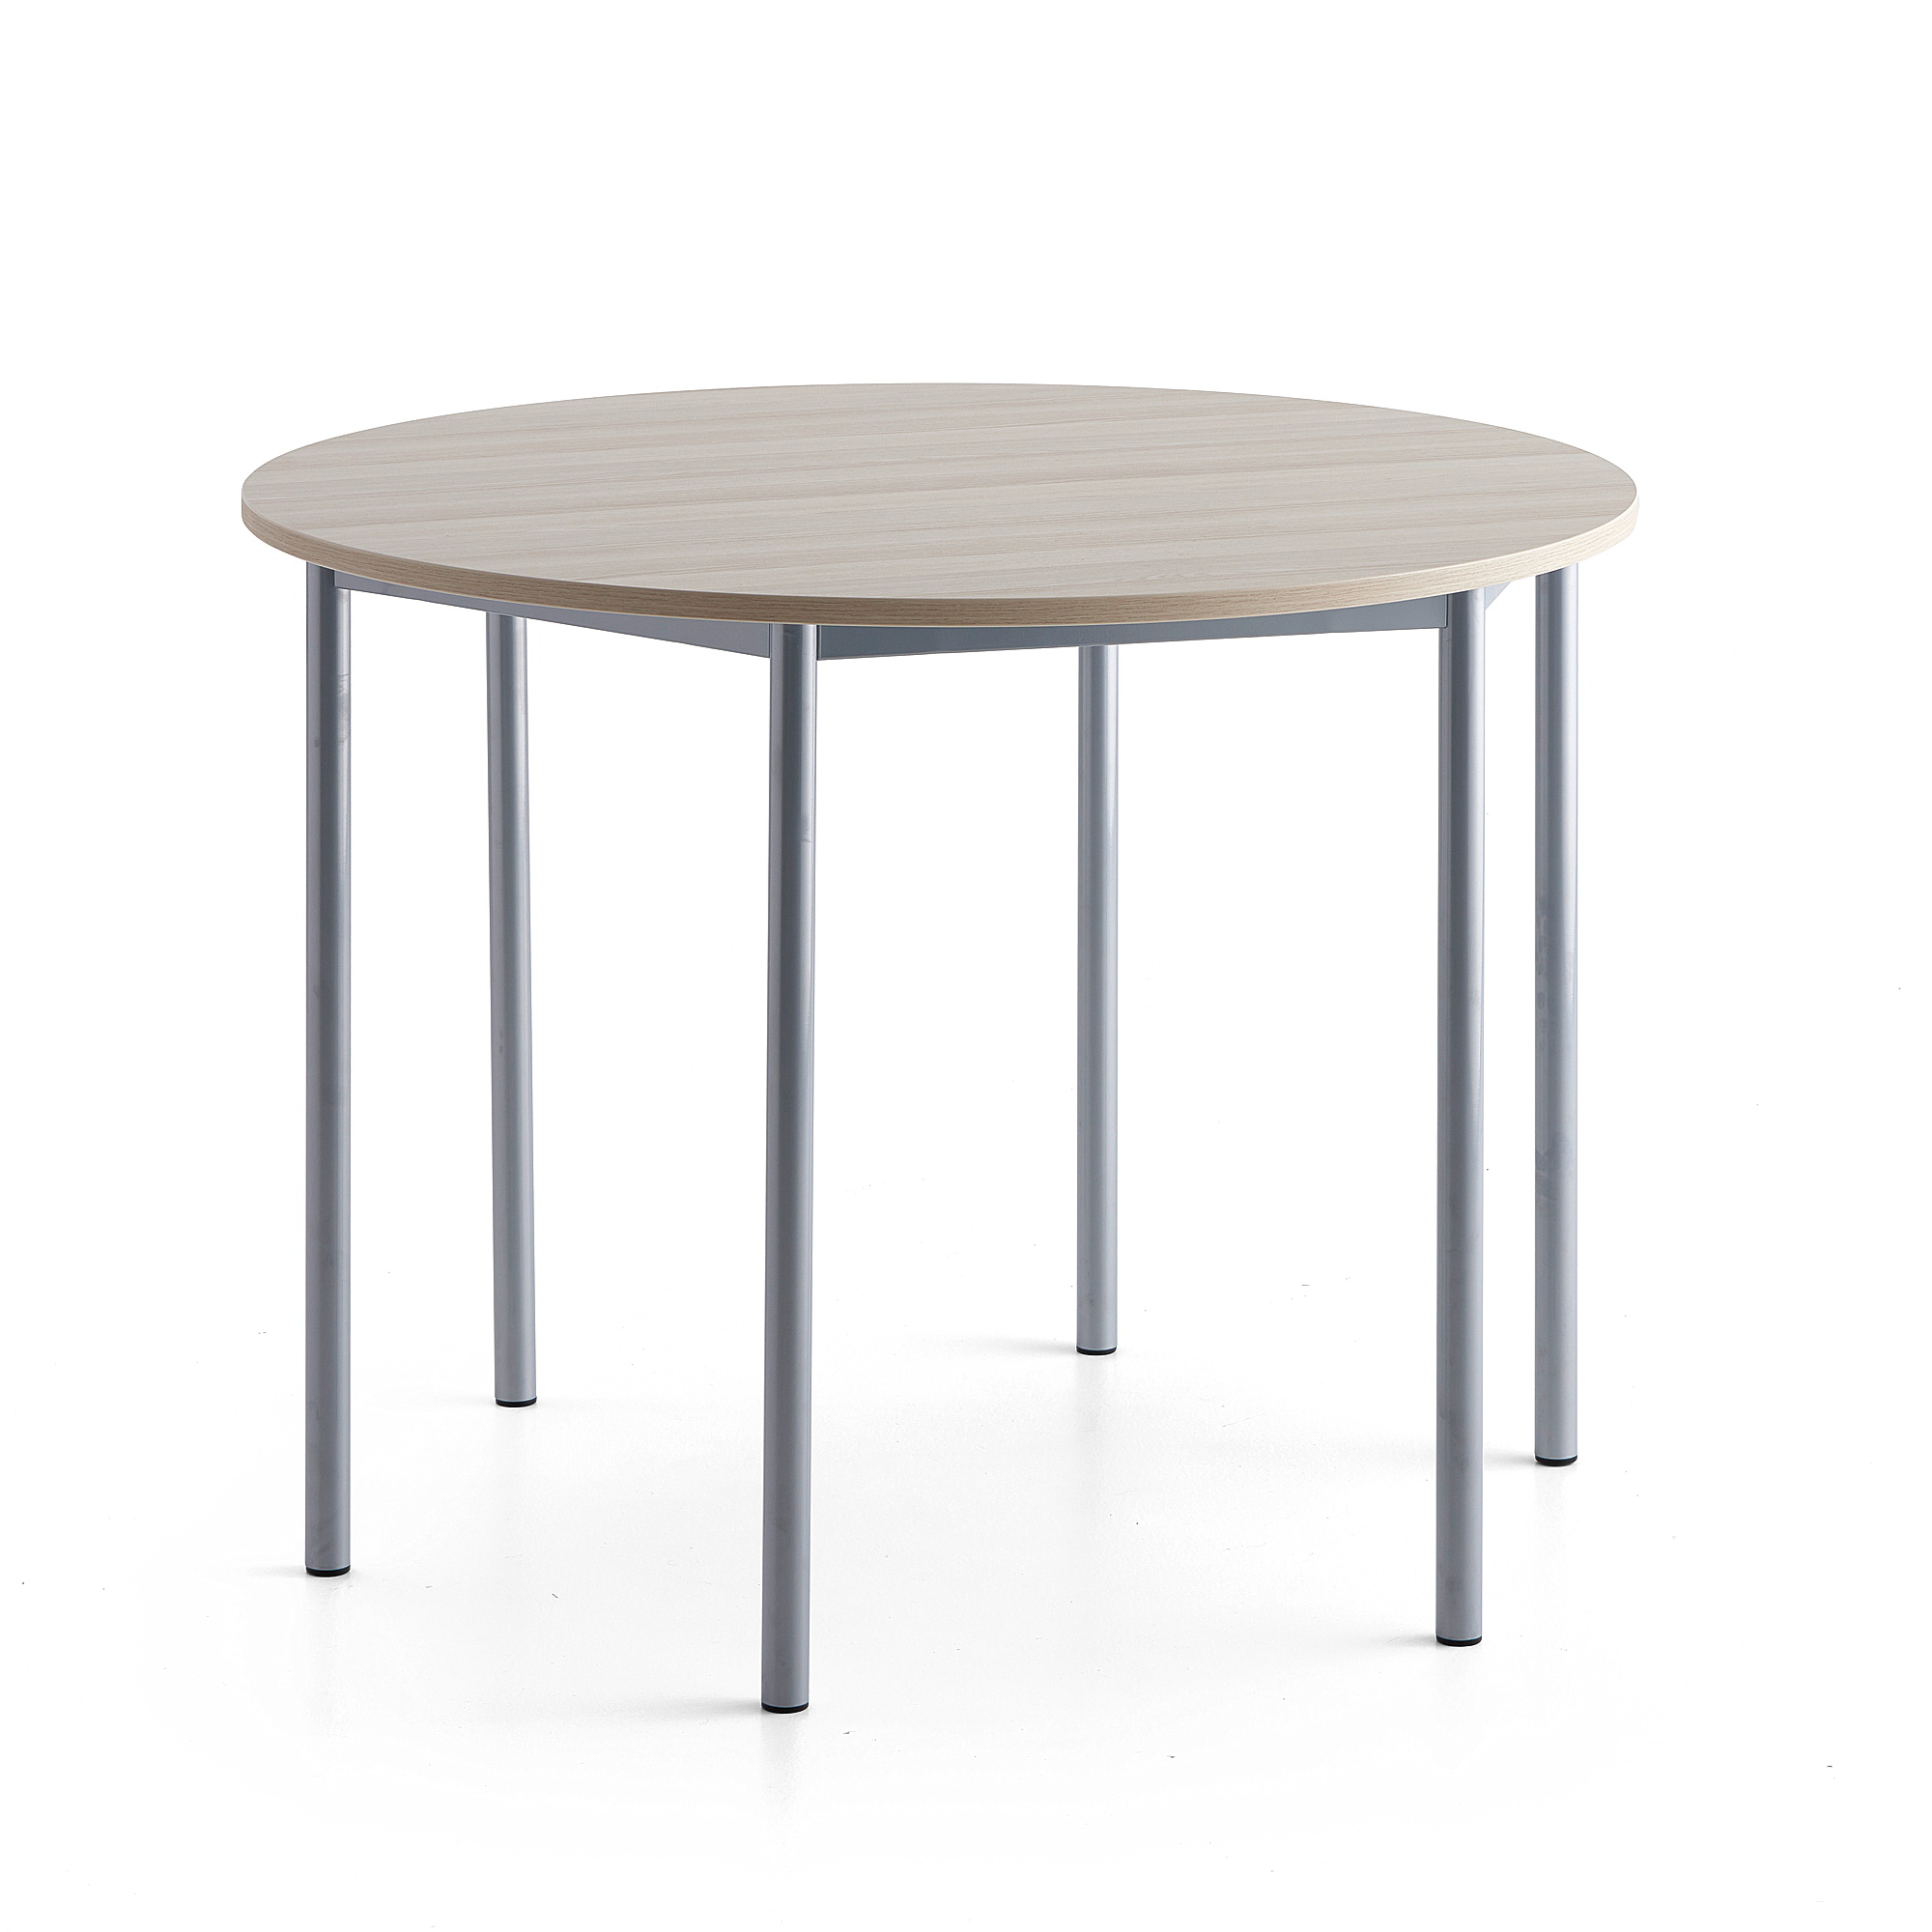 Stůl BORÅS PLUS, Ø1200x900 mm, stříbrné nohy, HPL deska, jasan